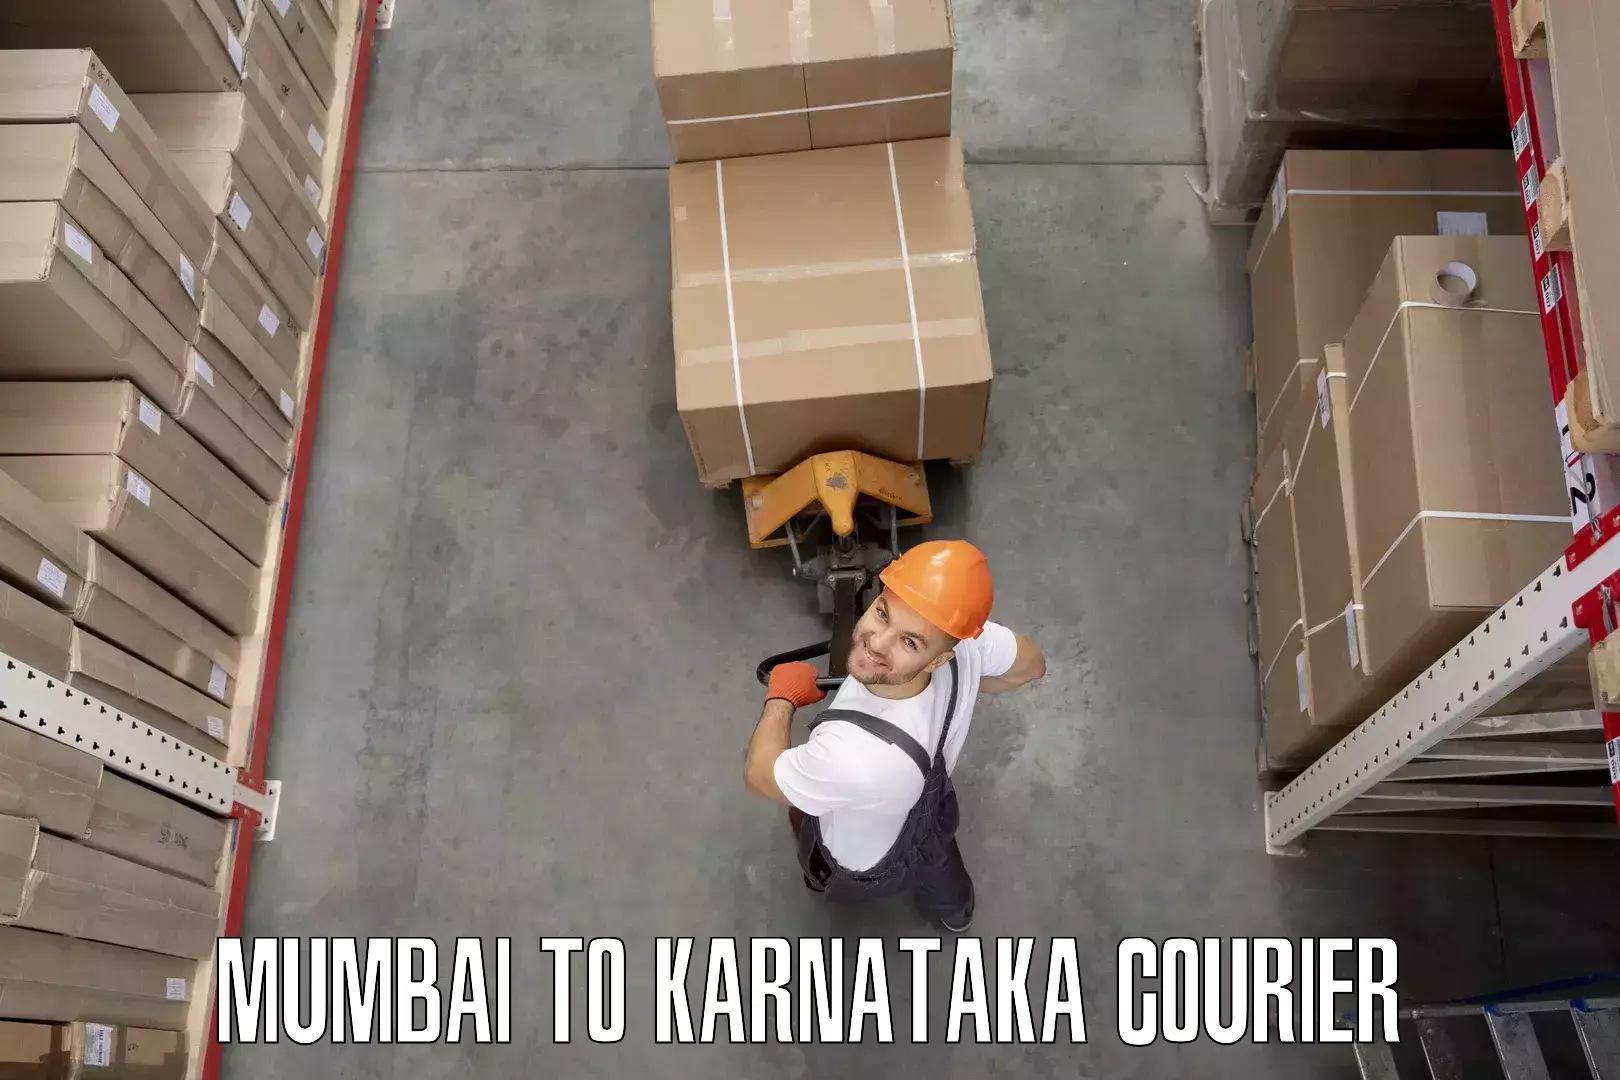 Furniture delivery service Mumbai to Ramanagara